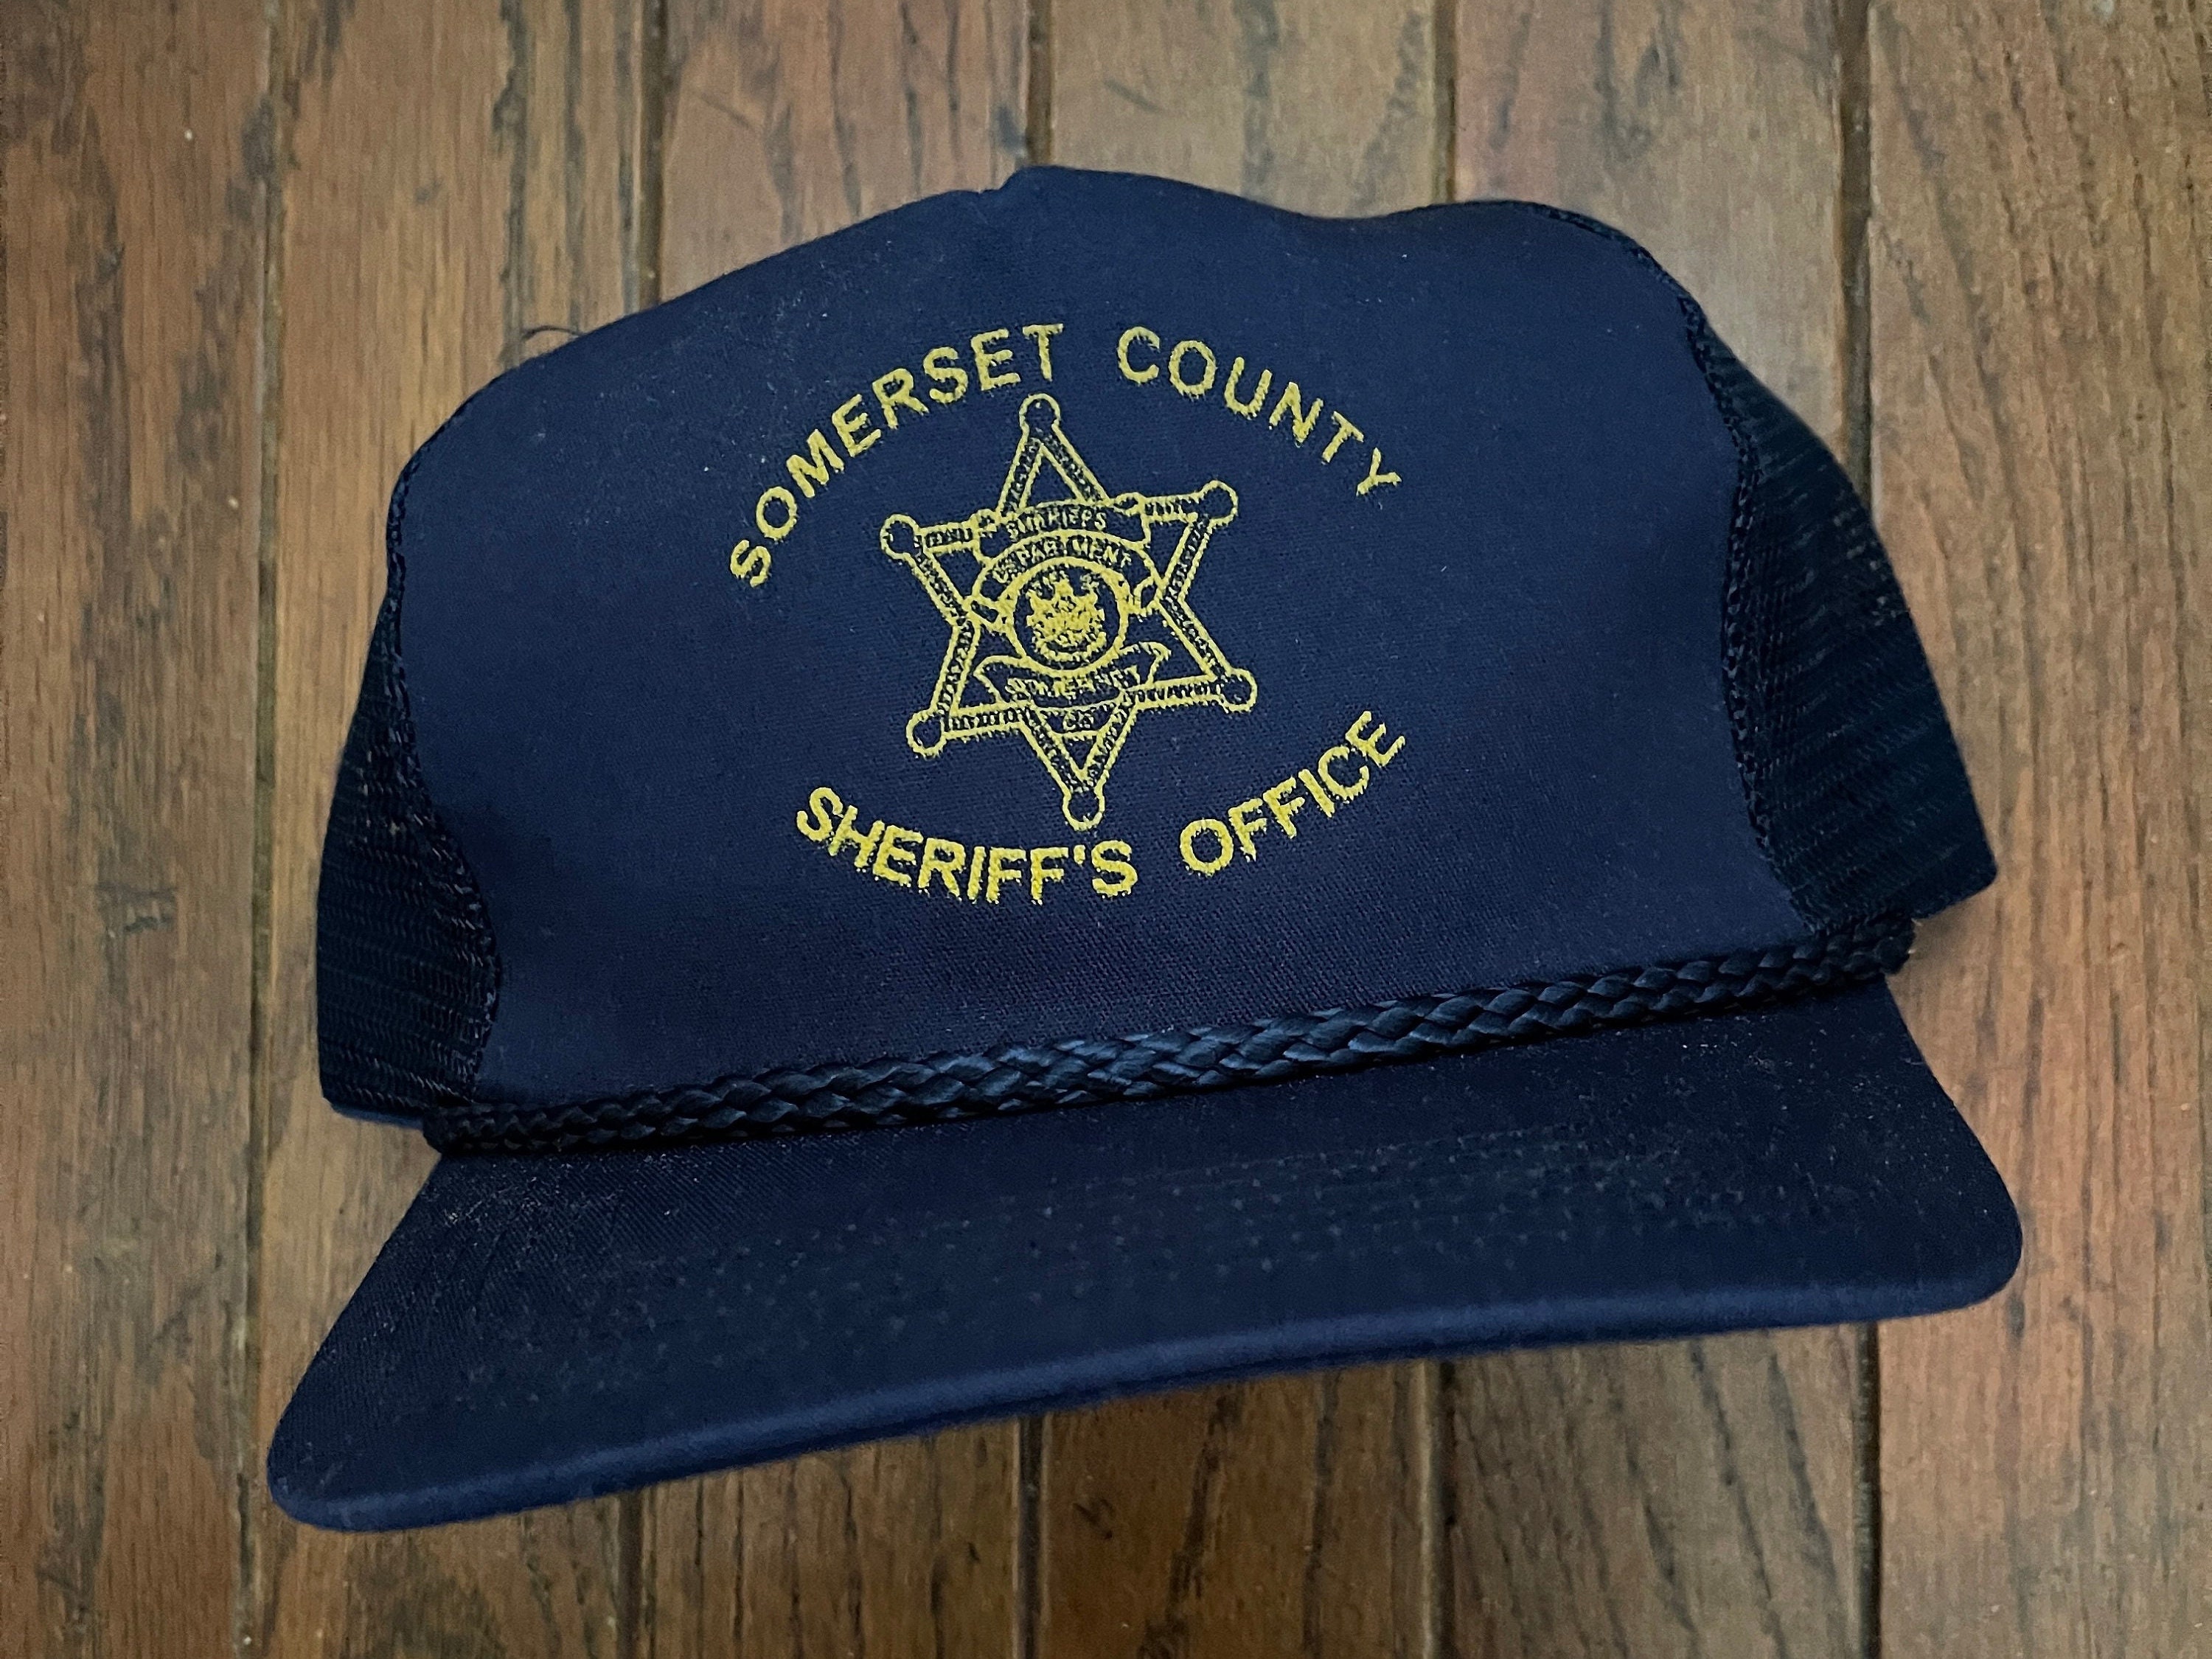 Vintage Somerset County Sheriff's Office Trucker Hat - Etsy